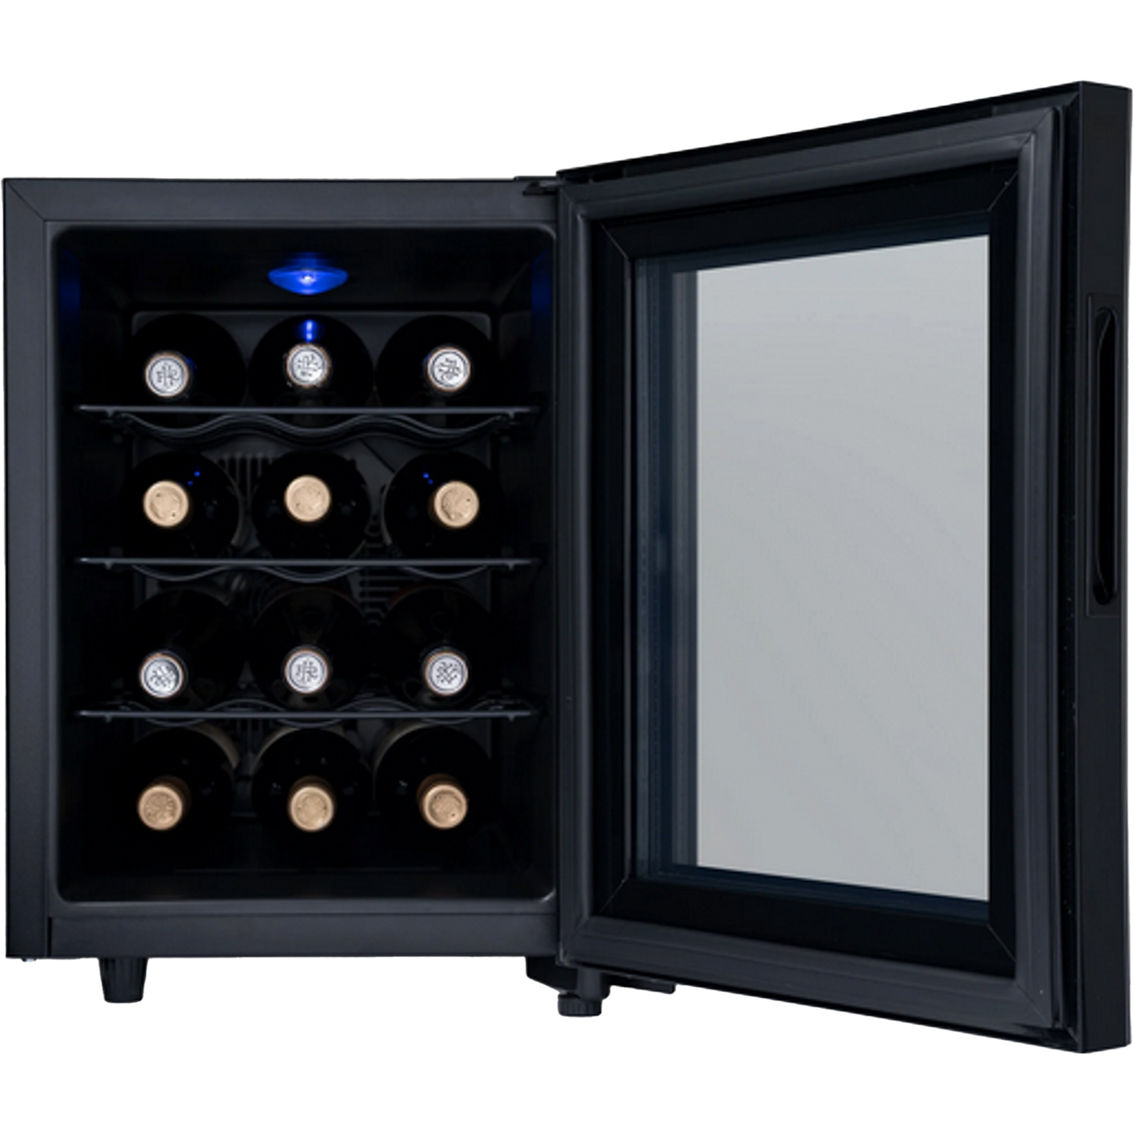 NewAir Shadow-T Series Wine Cooler Refrigerator - Image 2 of 8